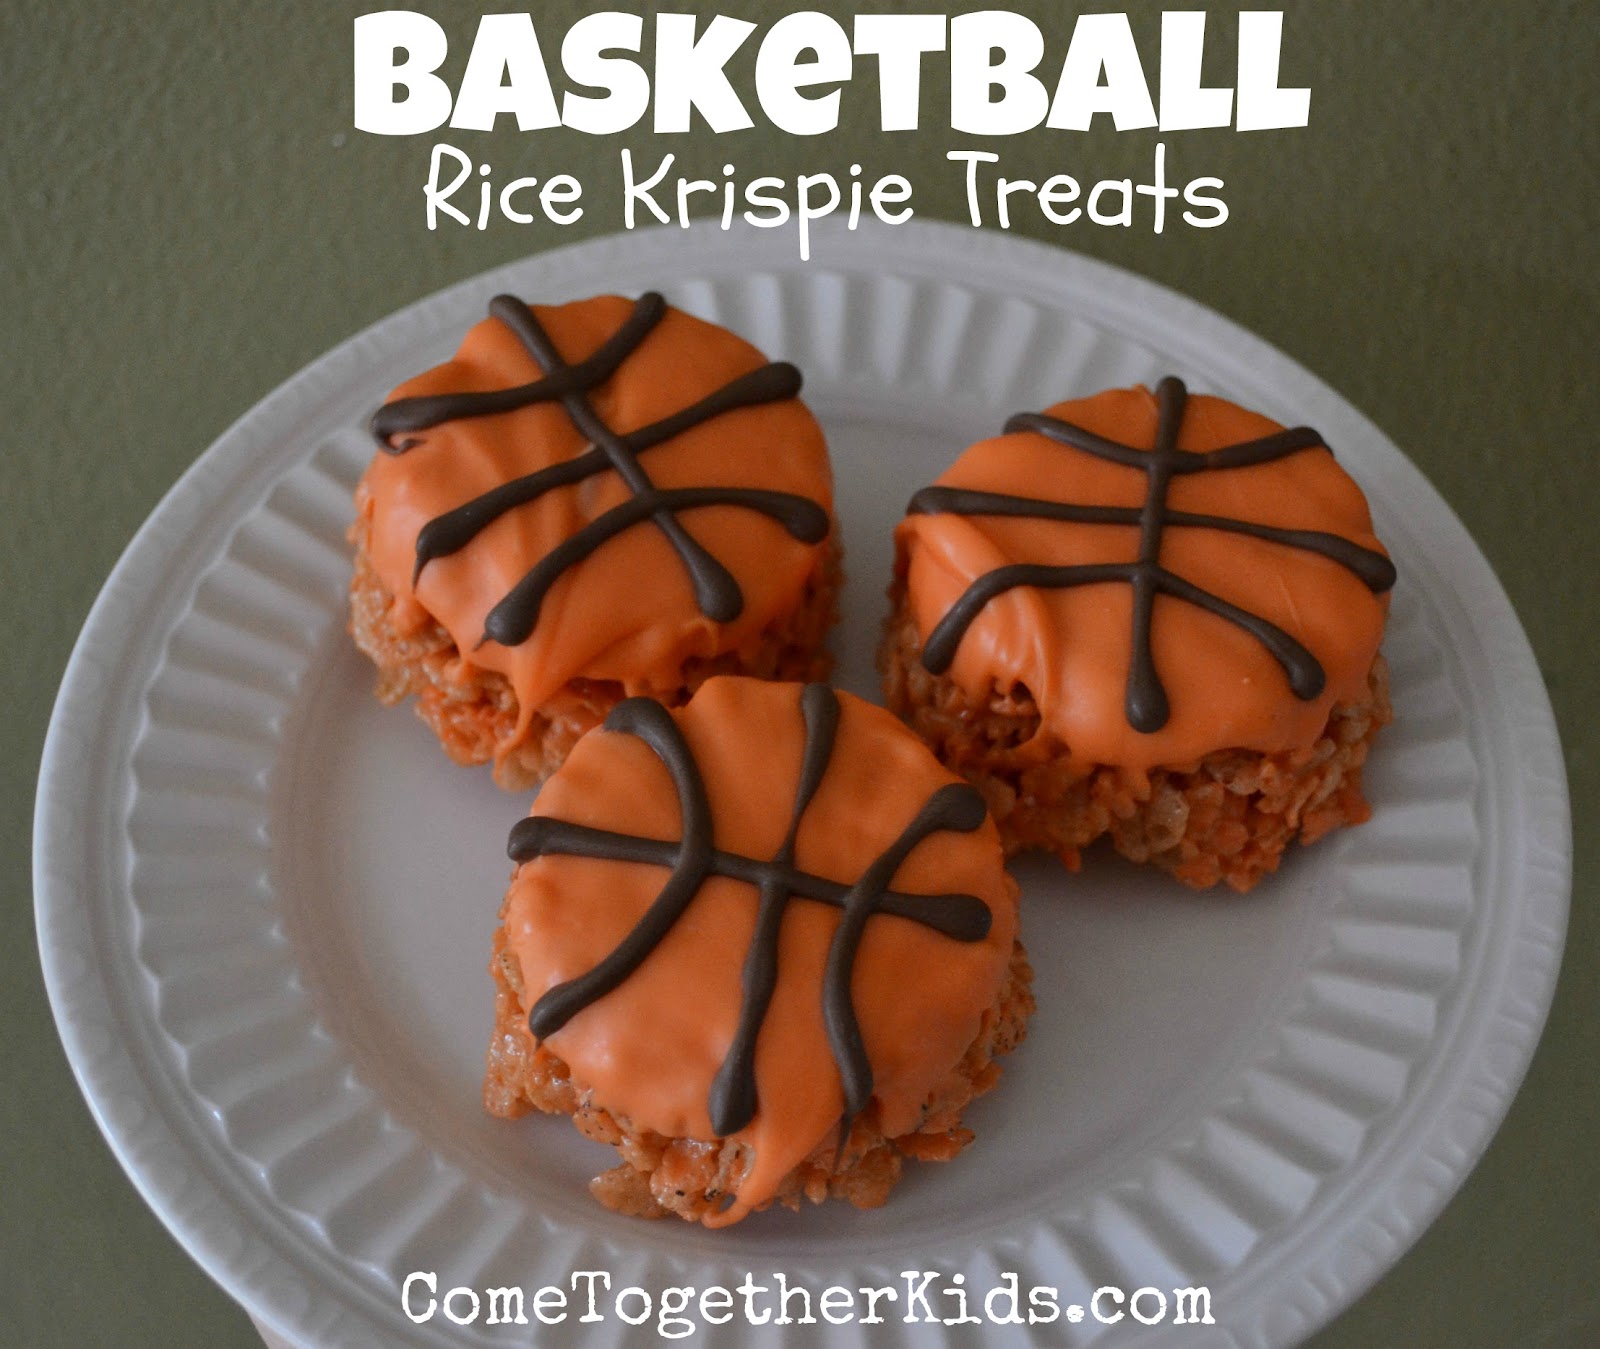 Come Together Kids Basketball Krispie Treats pic